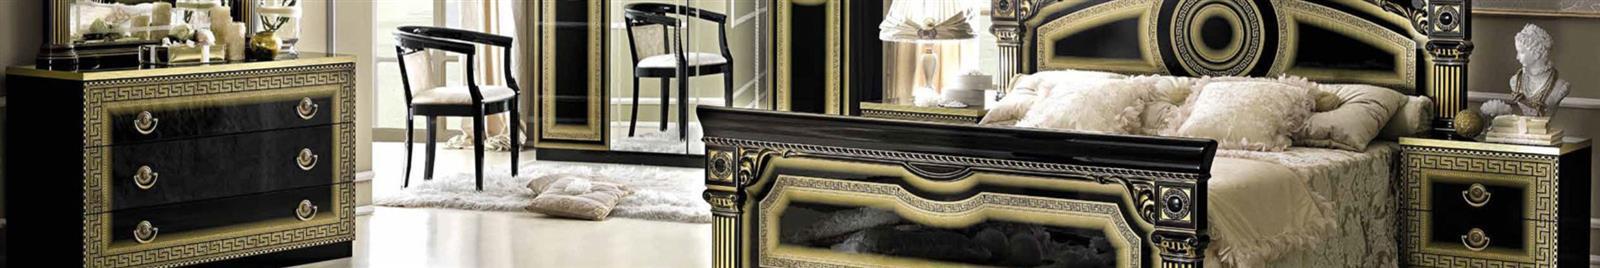 Aida Black & Gold Range - Italian Bedroom Furniture